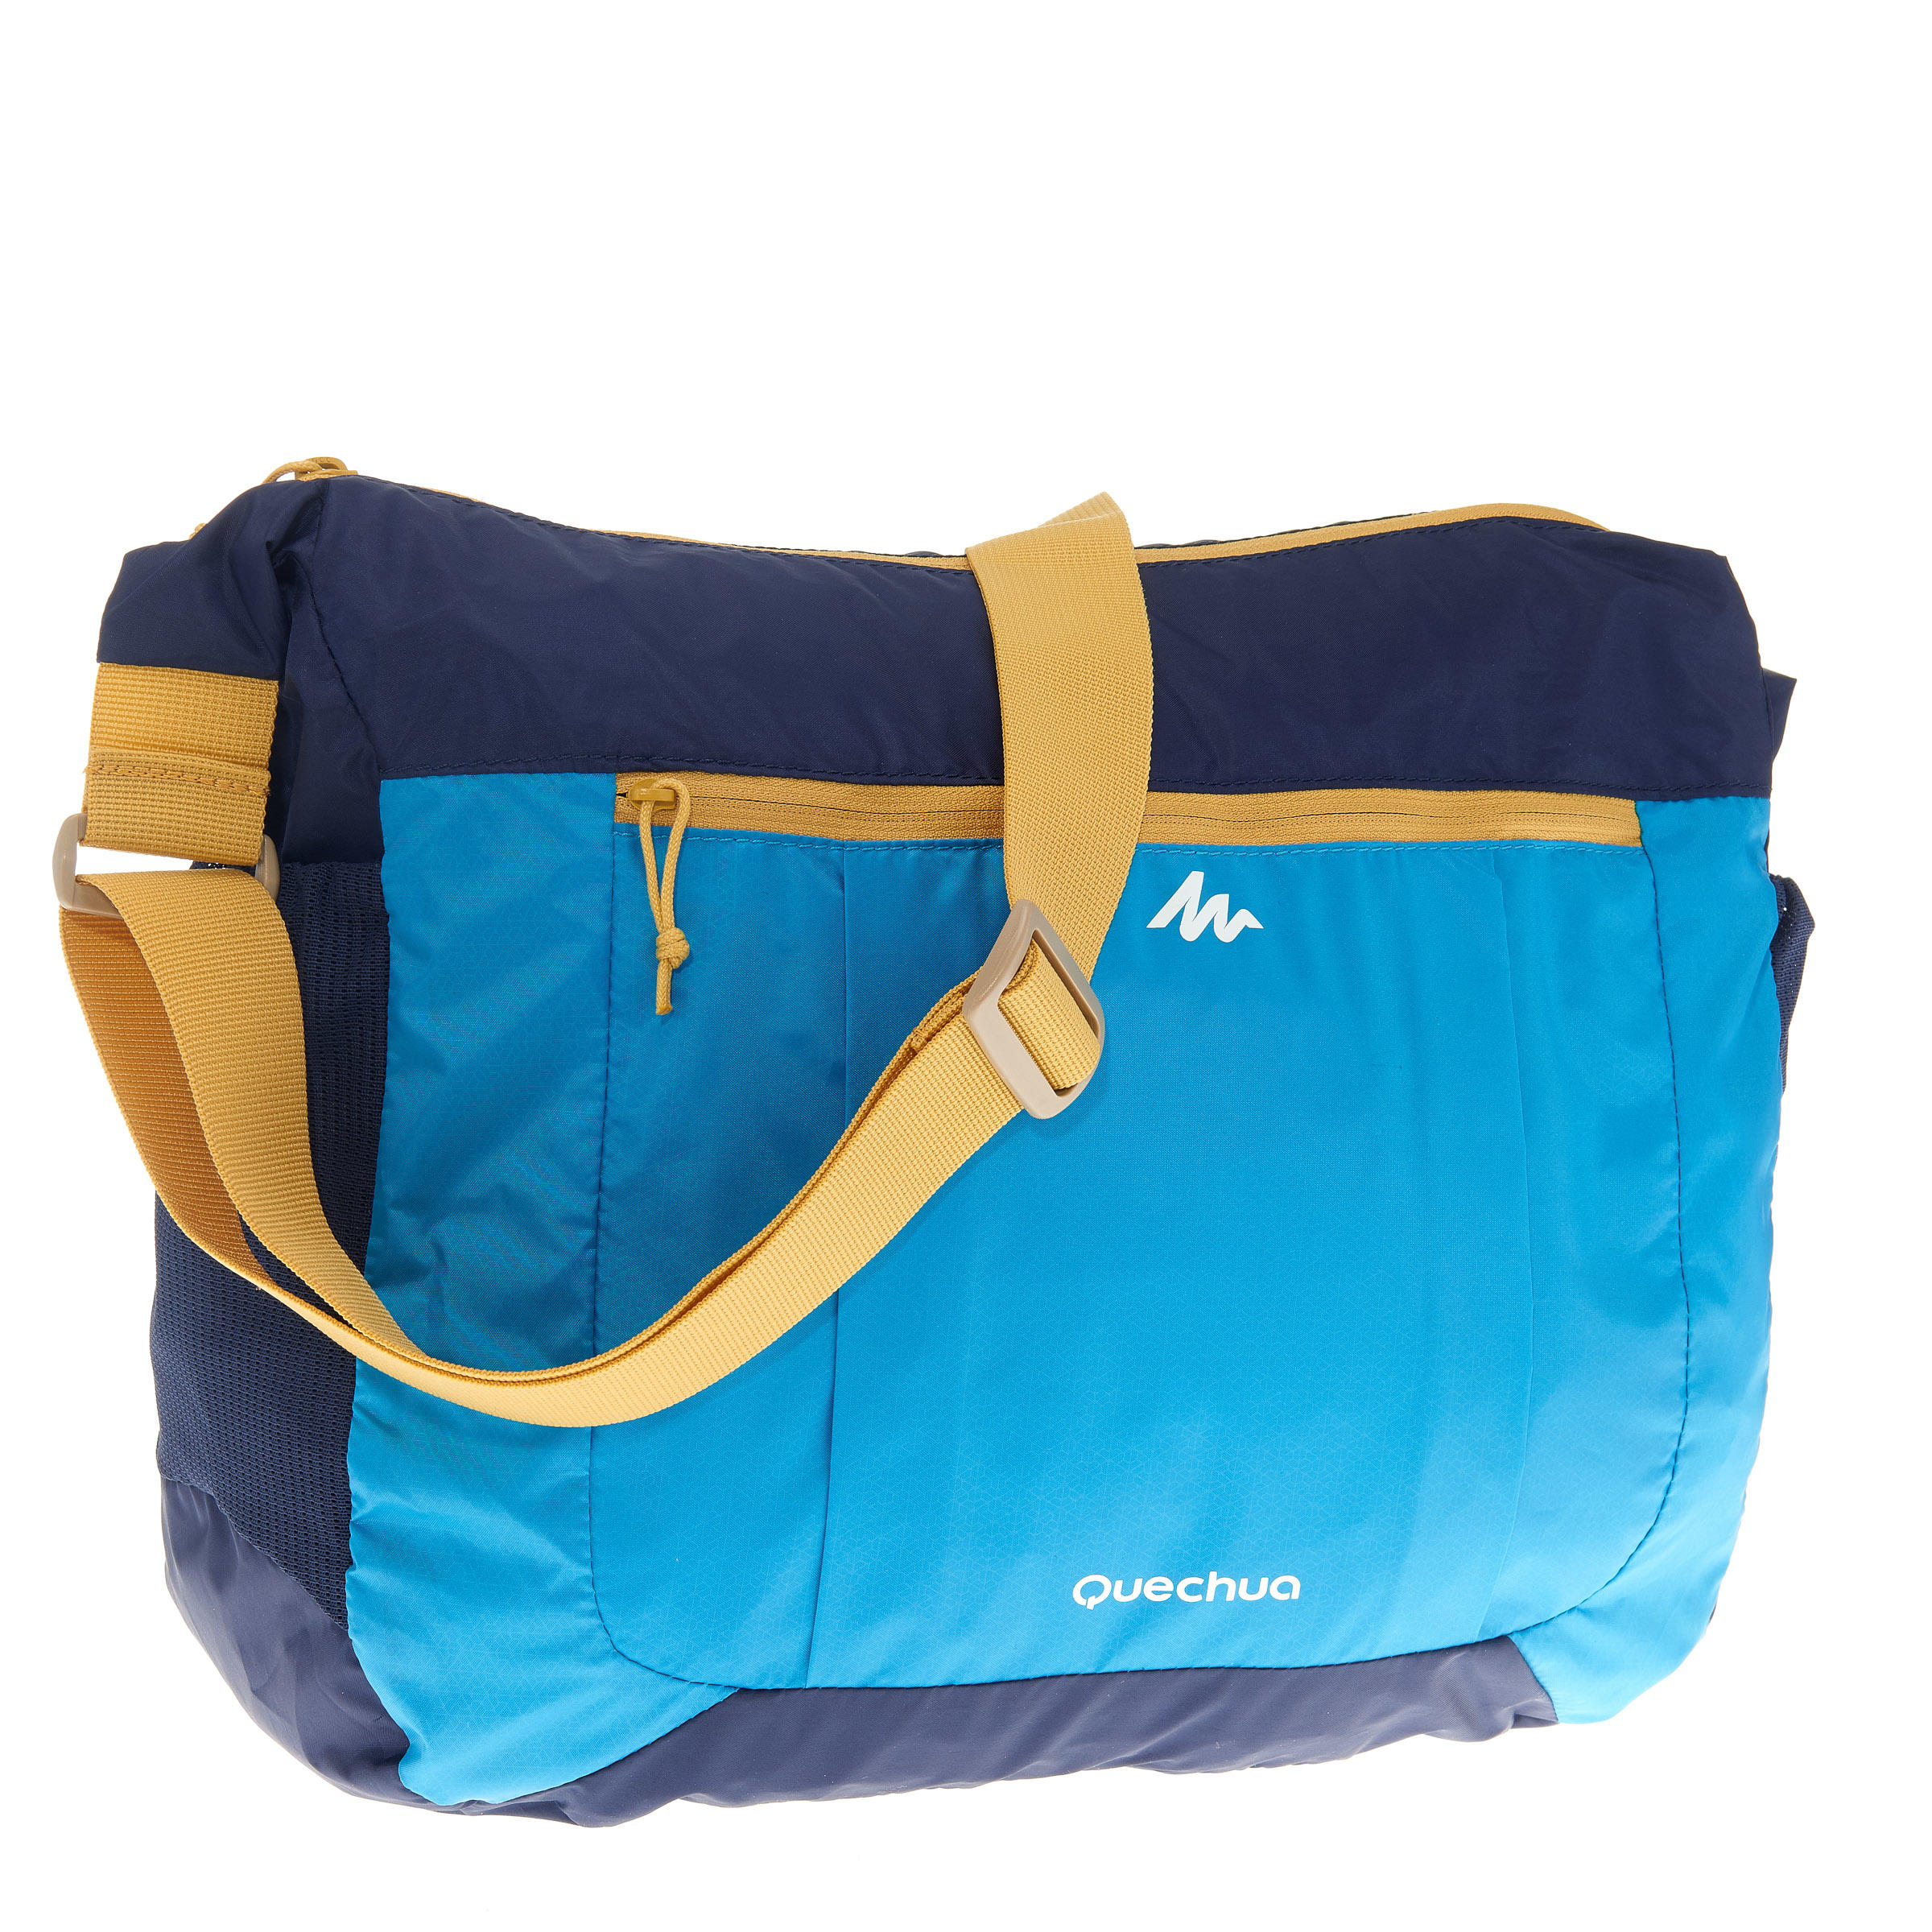 Travel Ultra-compact Messenger Bag - Blue 5/18